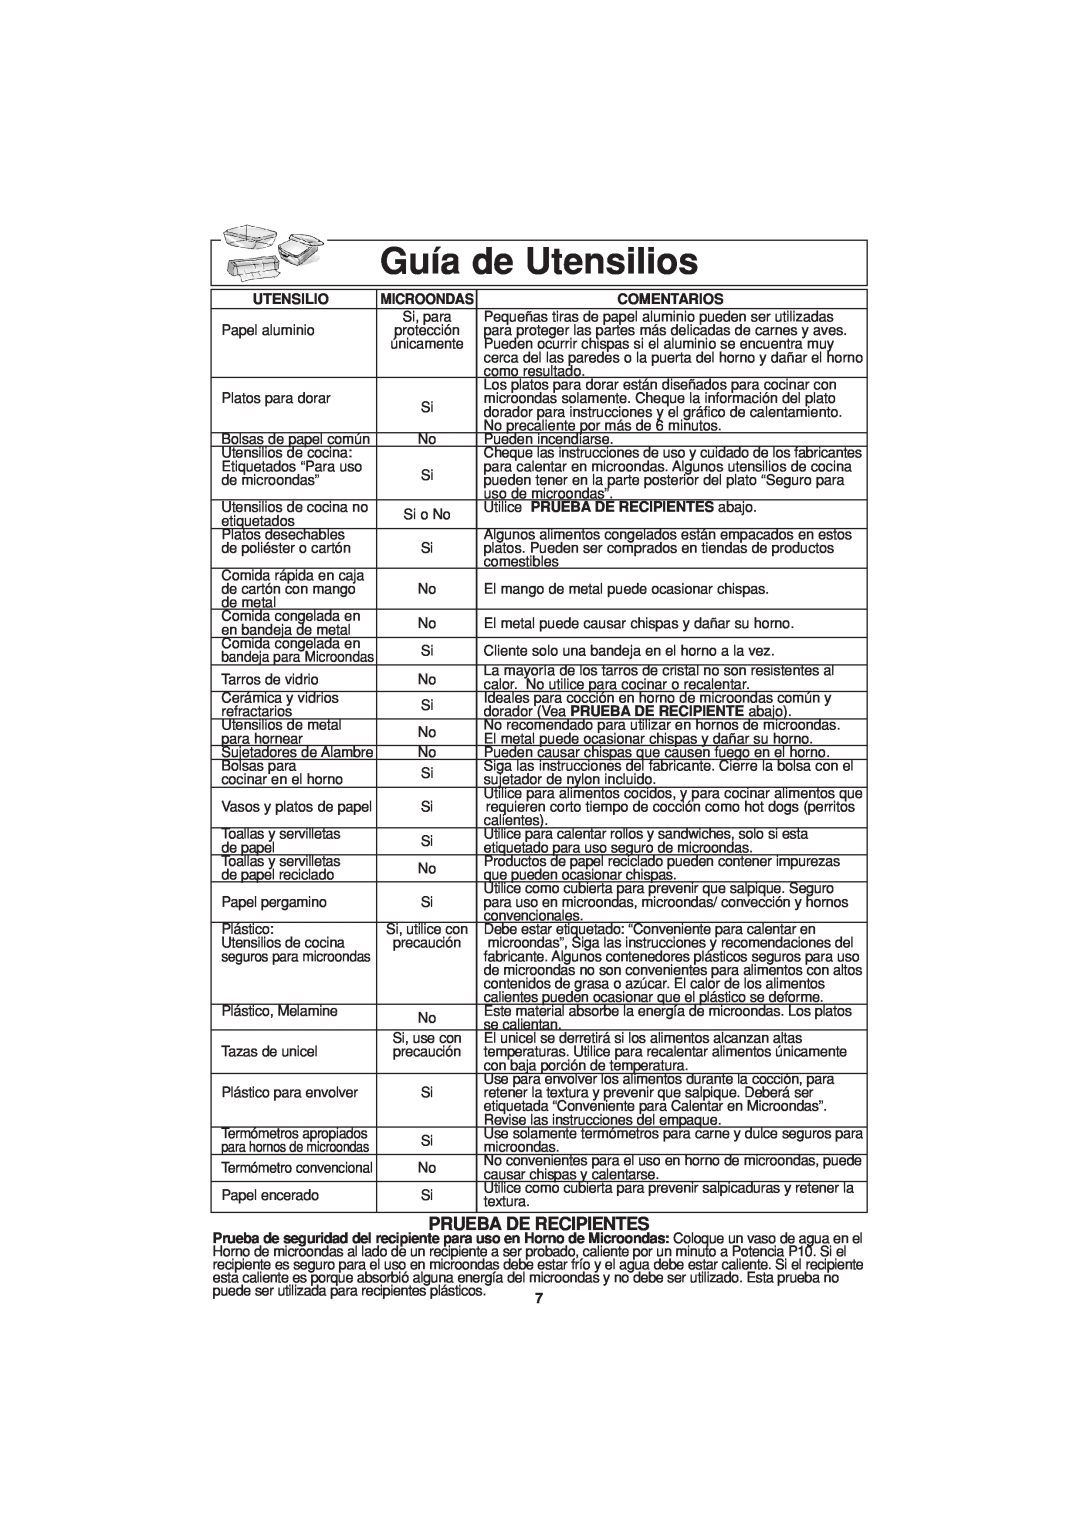 Panasonic NN-T694 operating instructions Guía de Utensilios, Prueba De Recipientes 